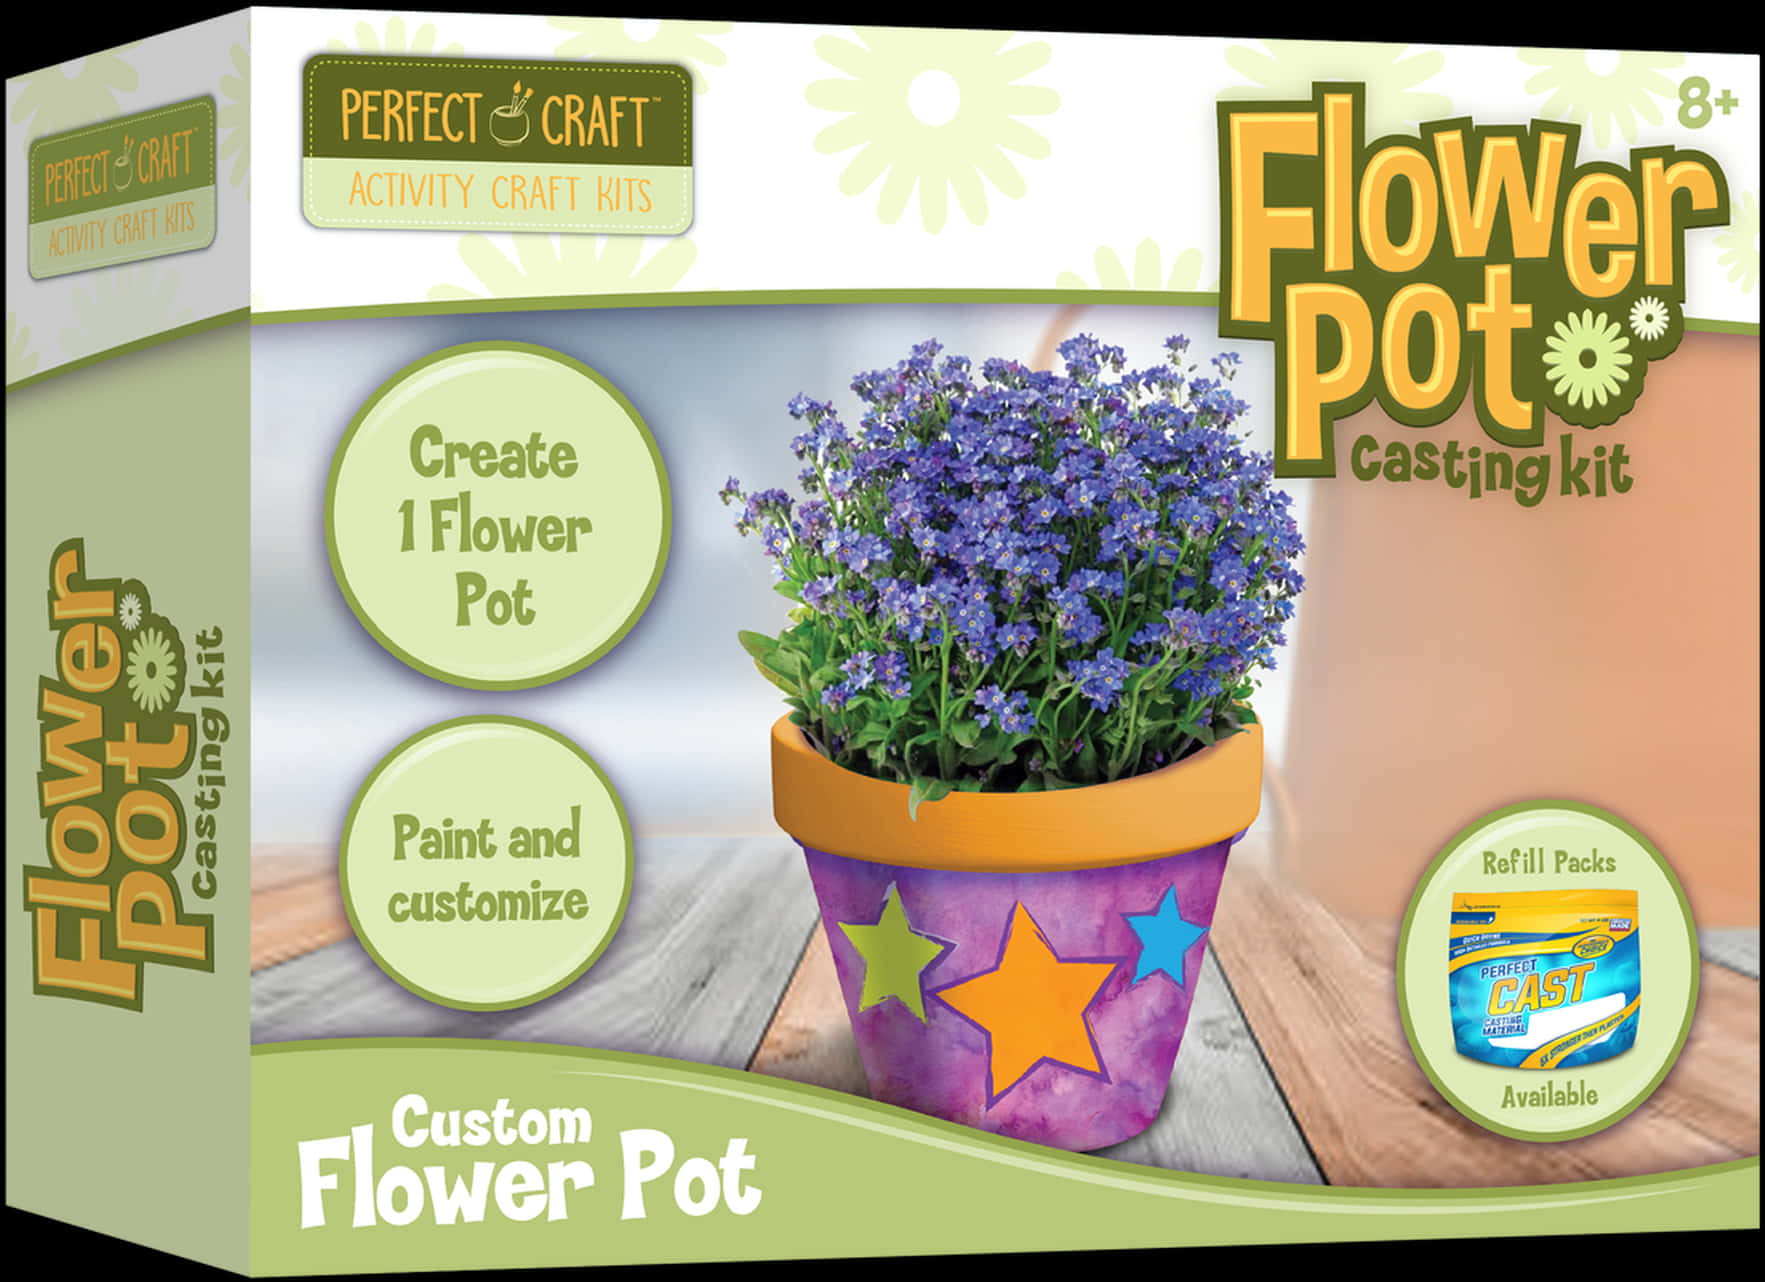 Flower Pot Casting Kit Packaging PNG